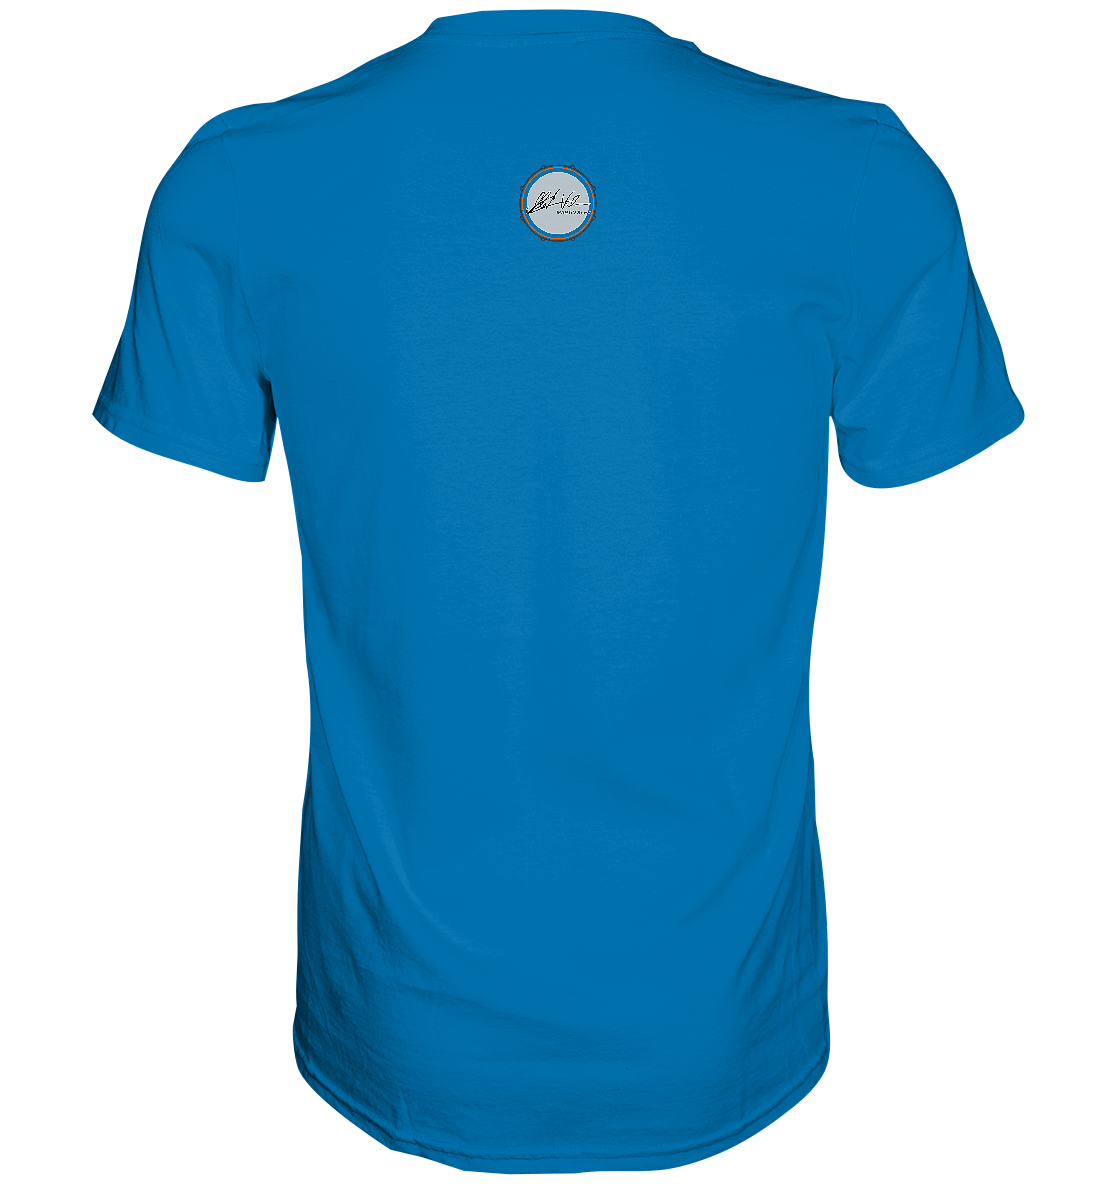 founder v2 - unisex shirt | various colors